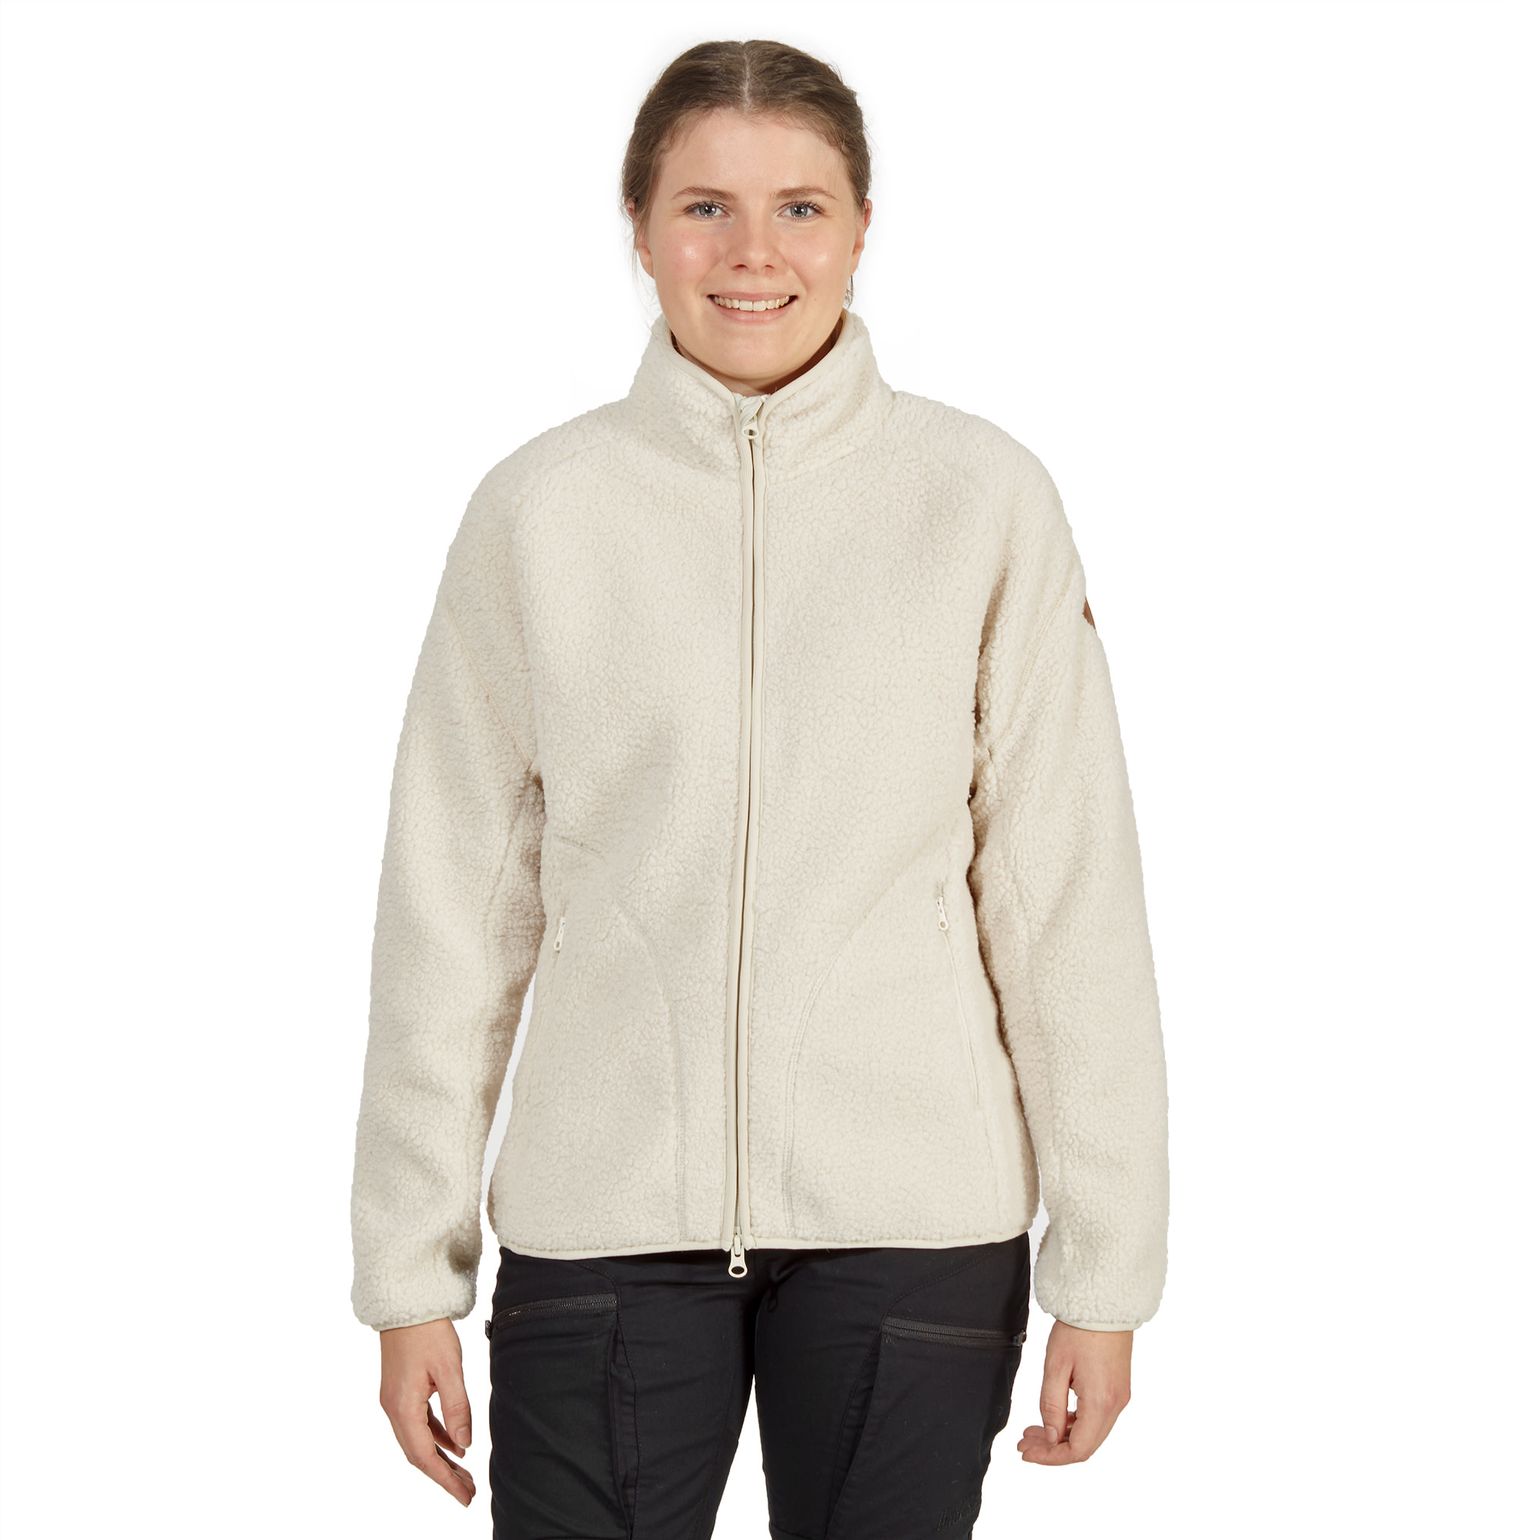 Women's Åheim Pile Jacket Bone White